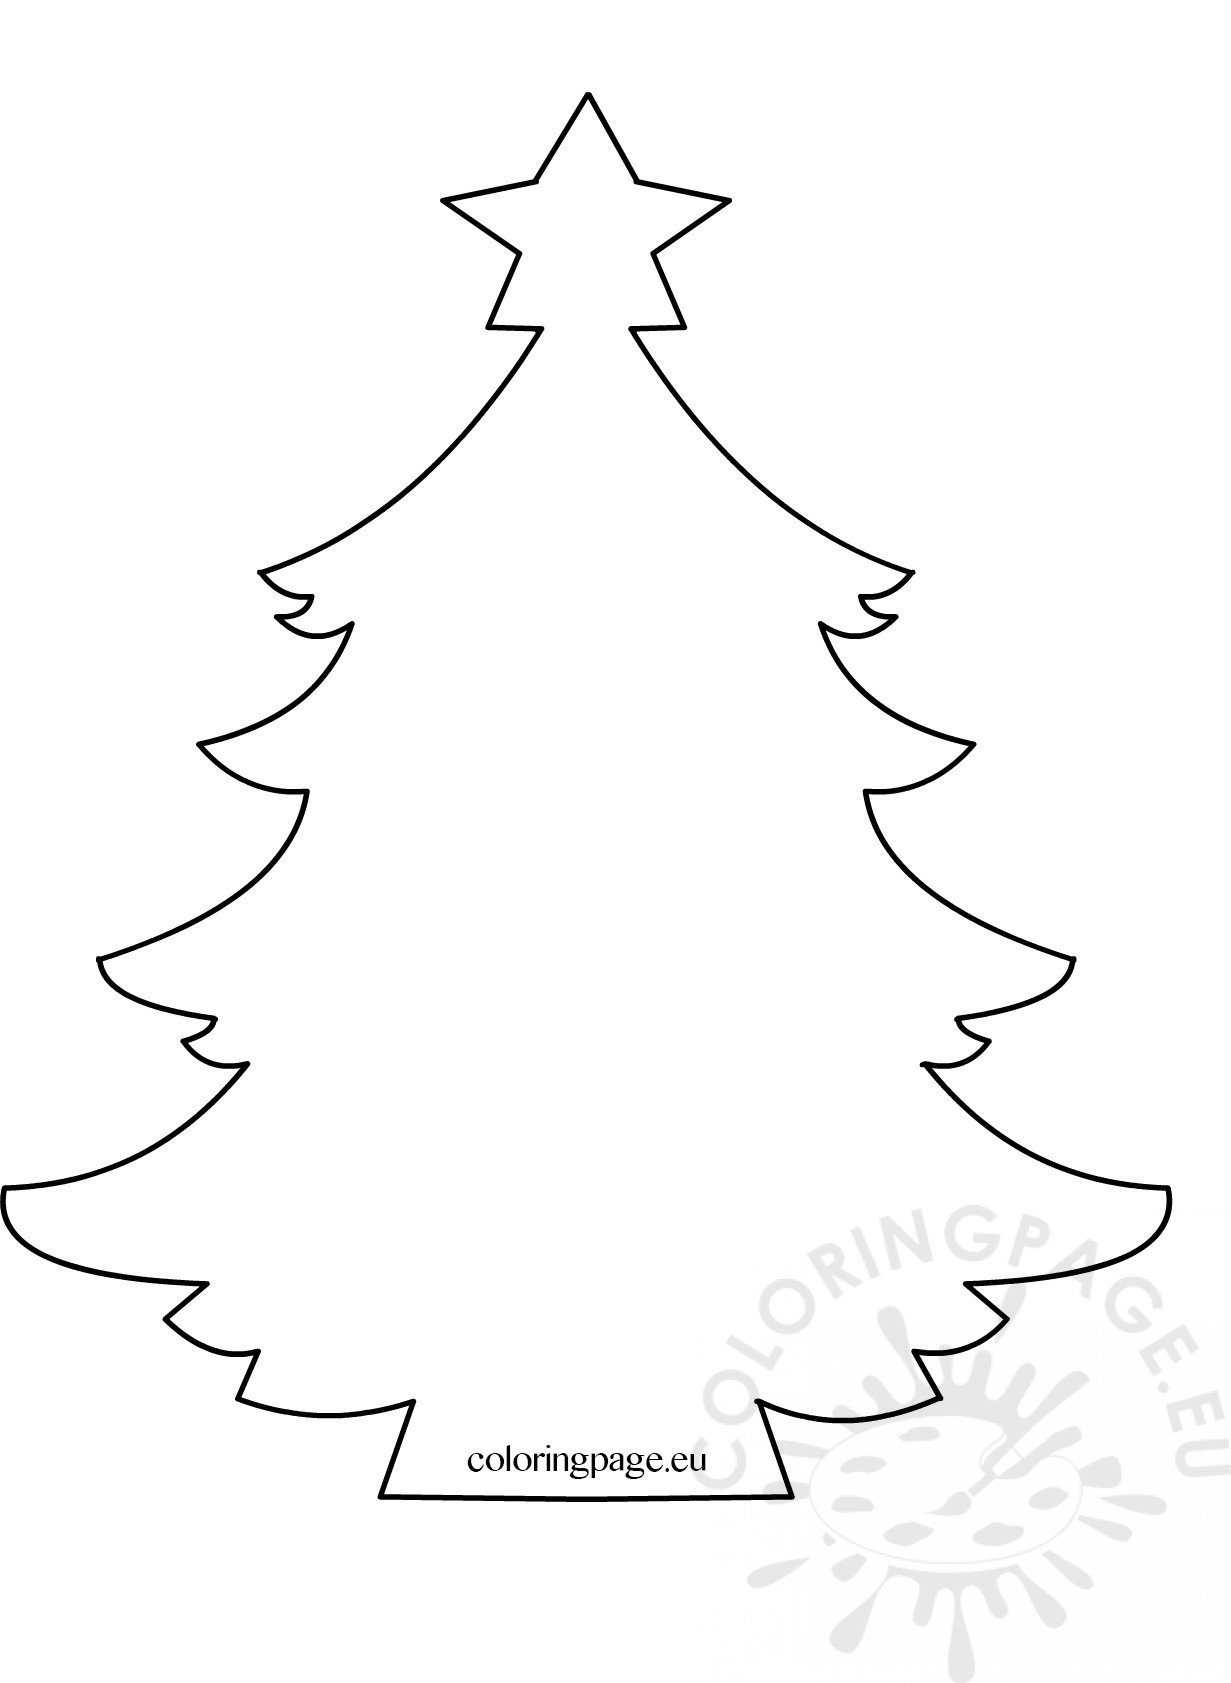 Star For Christmas Tree Template